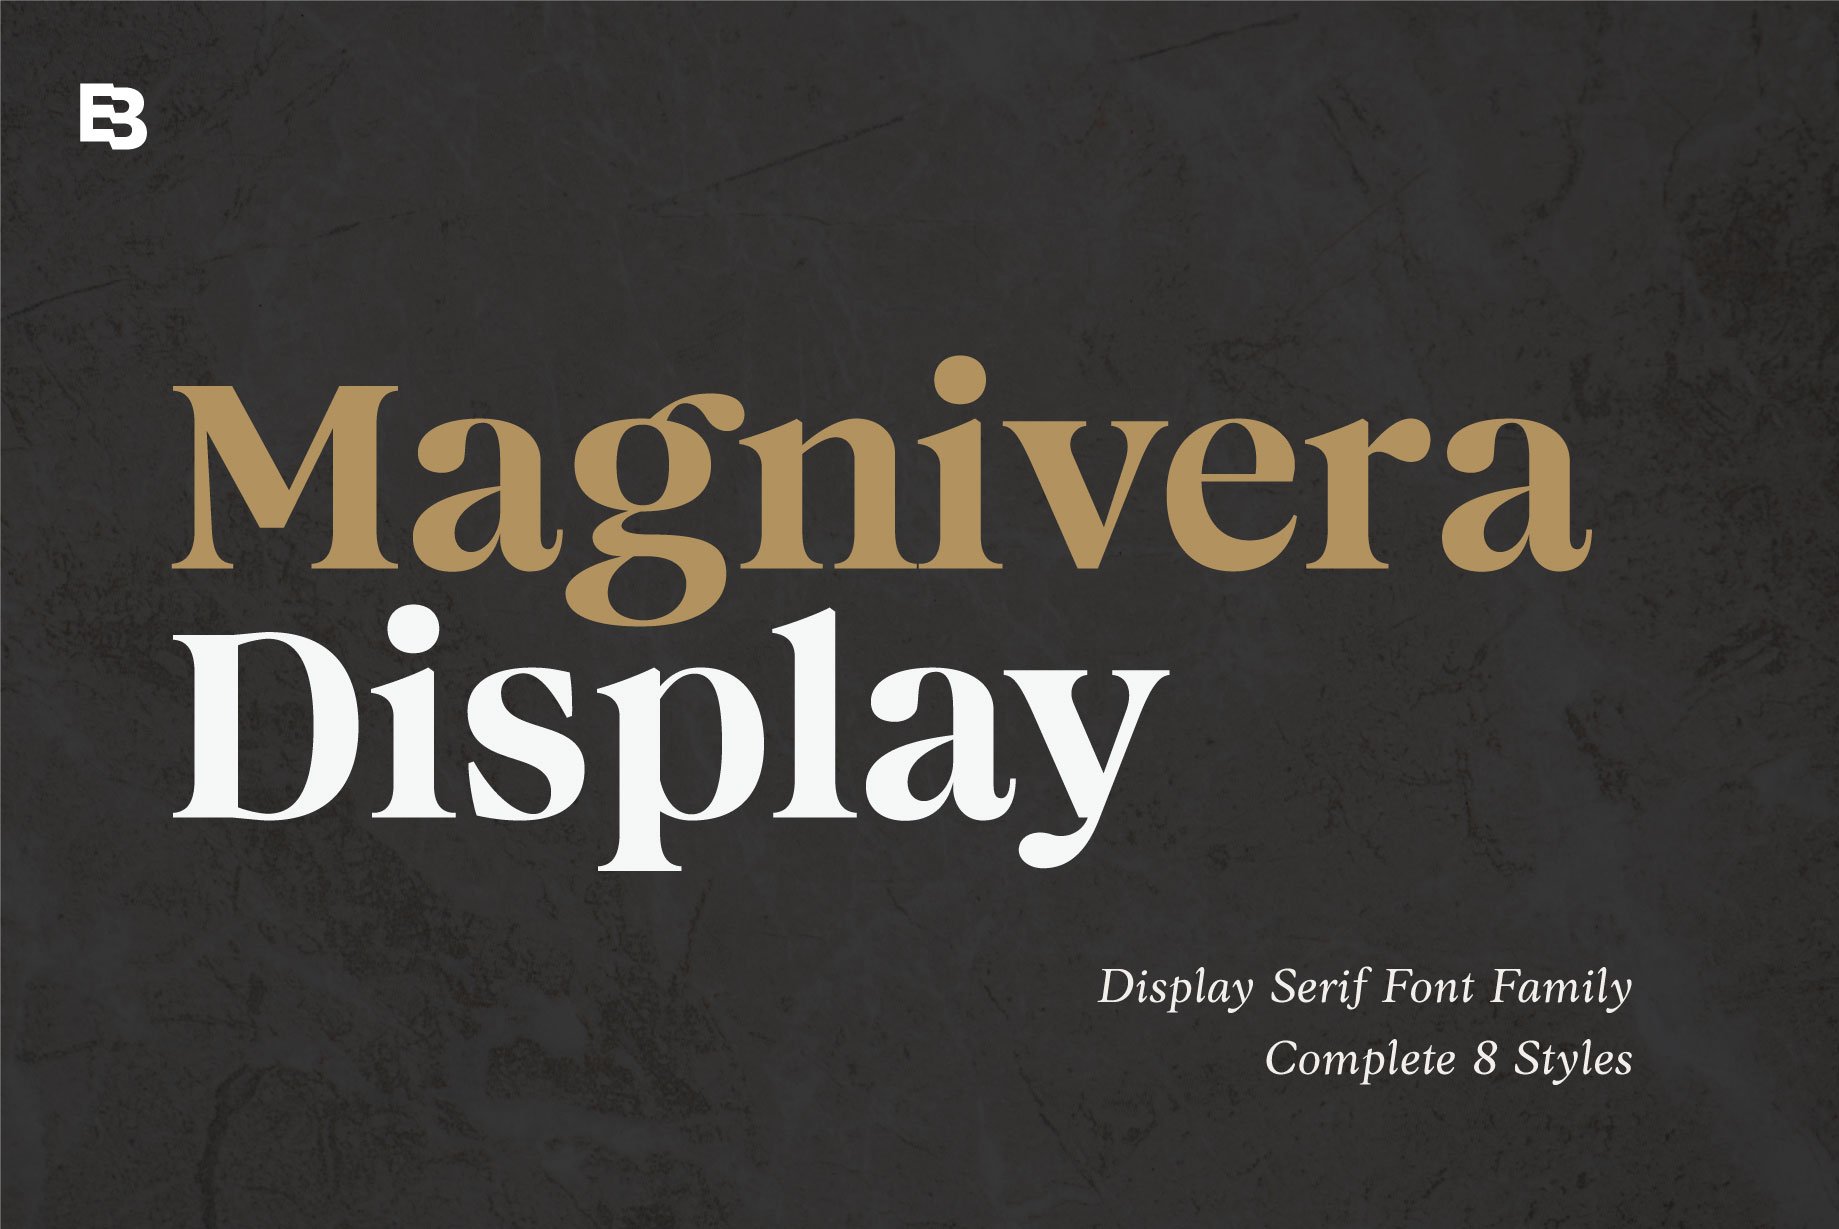 Magnivera; Display Serif Fonts cover image.